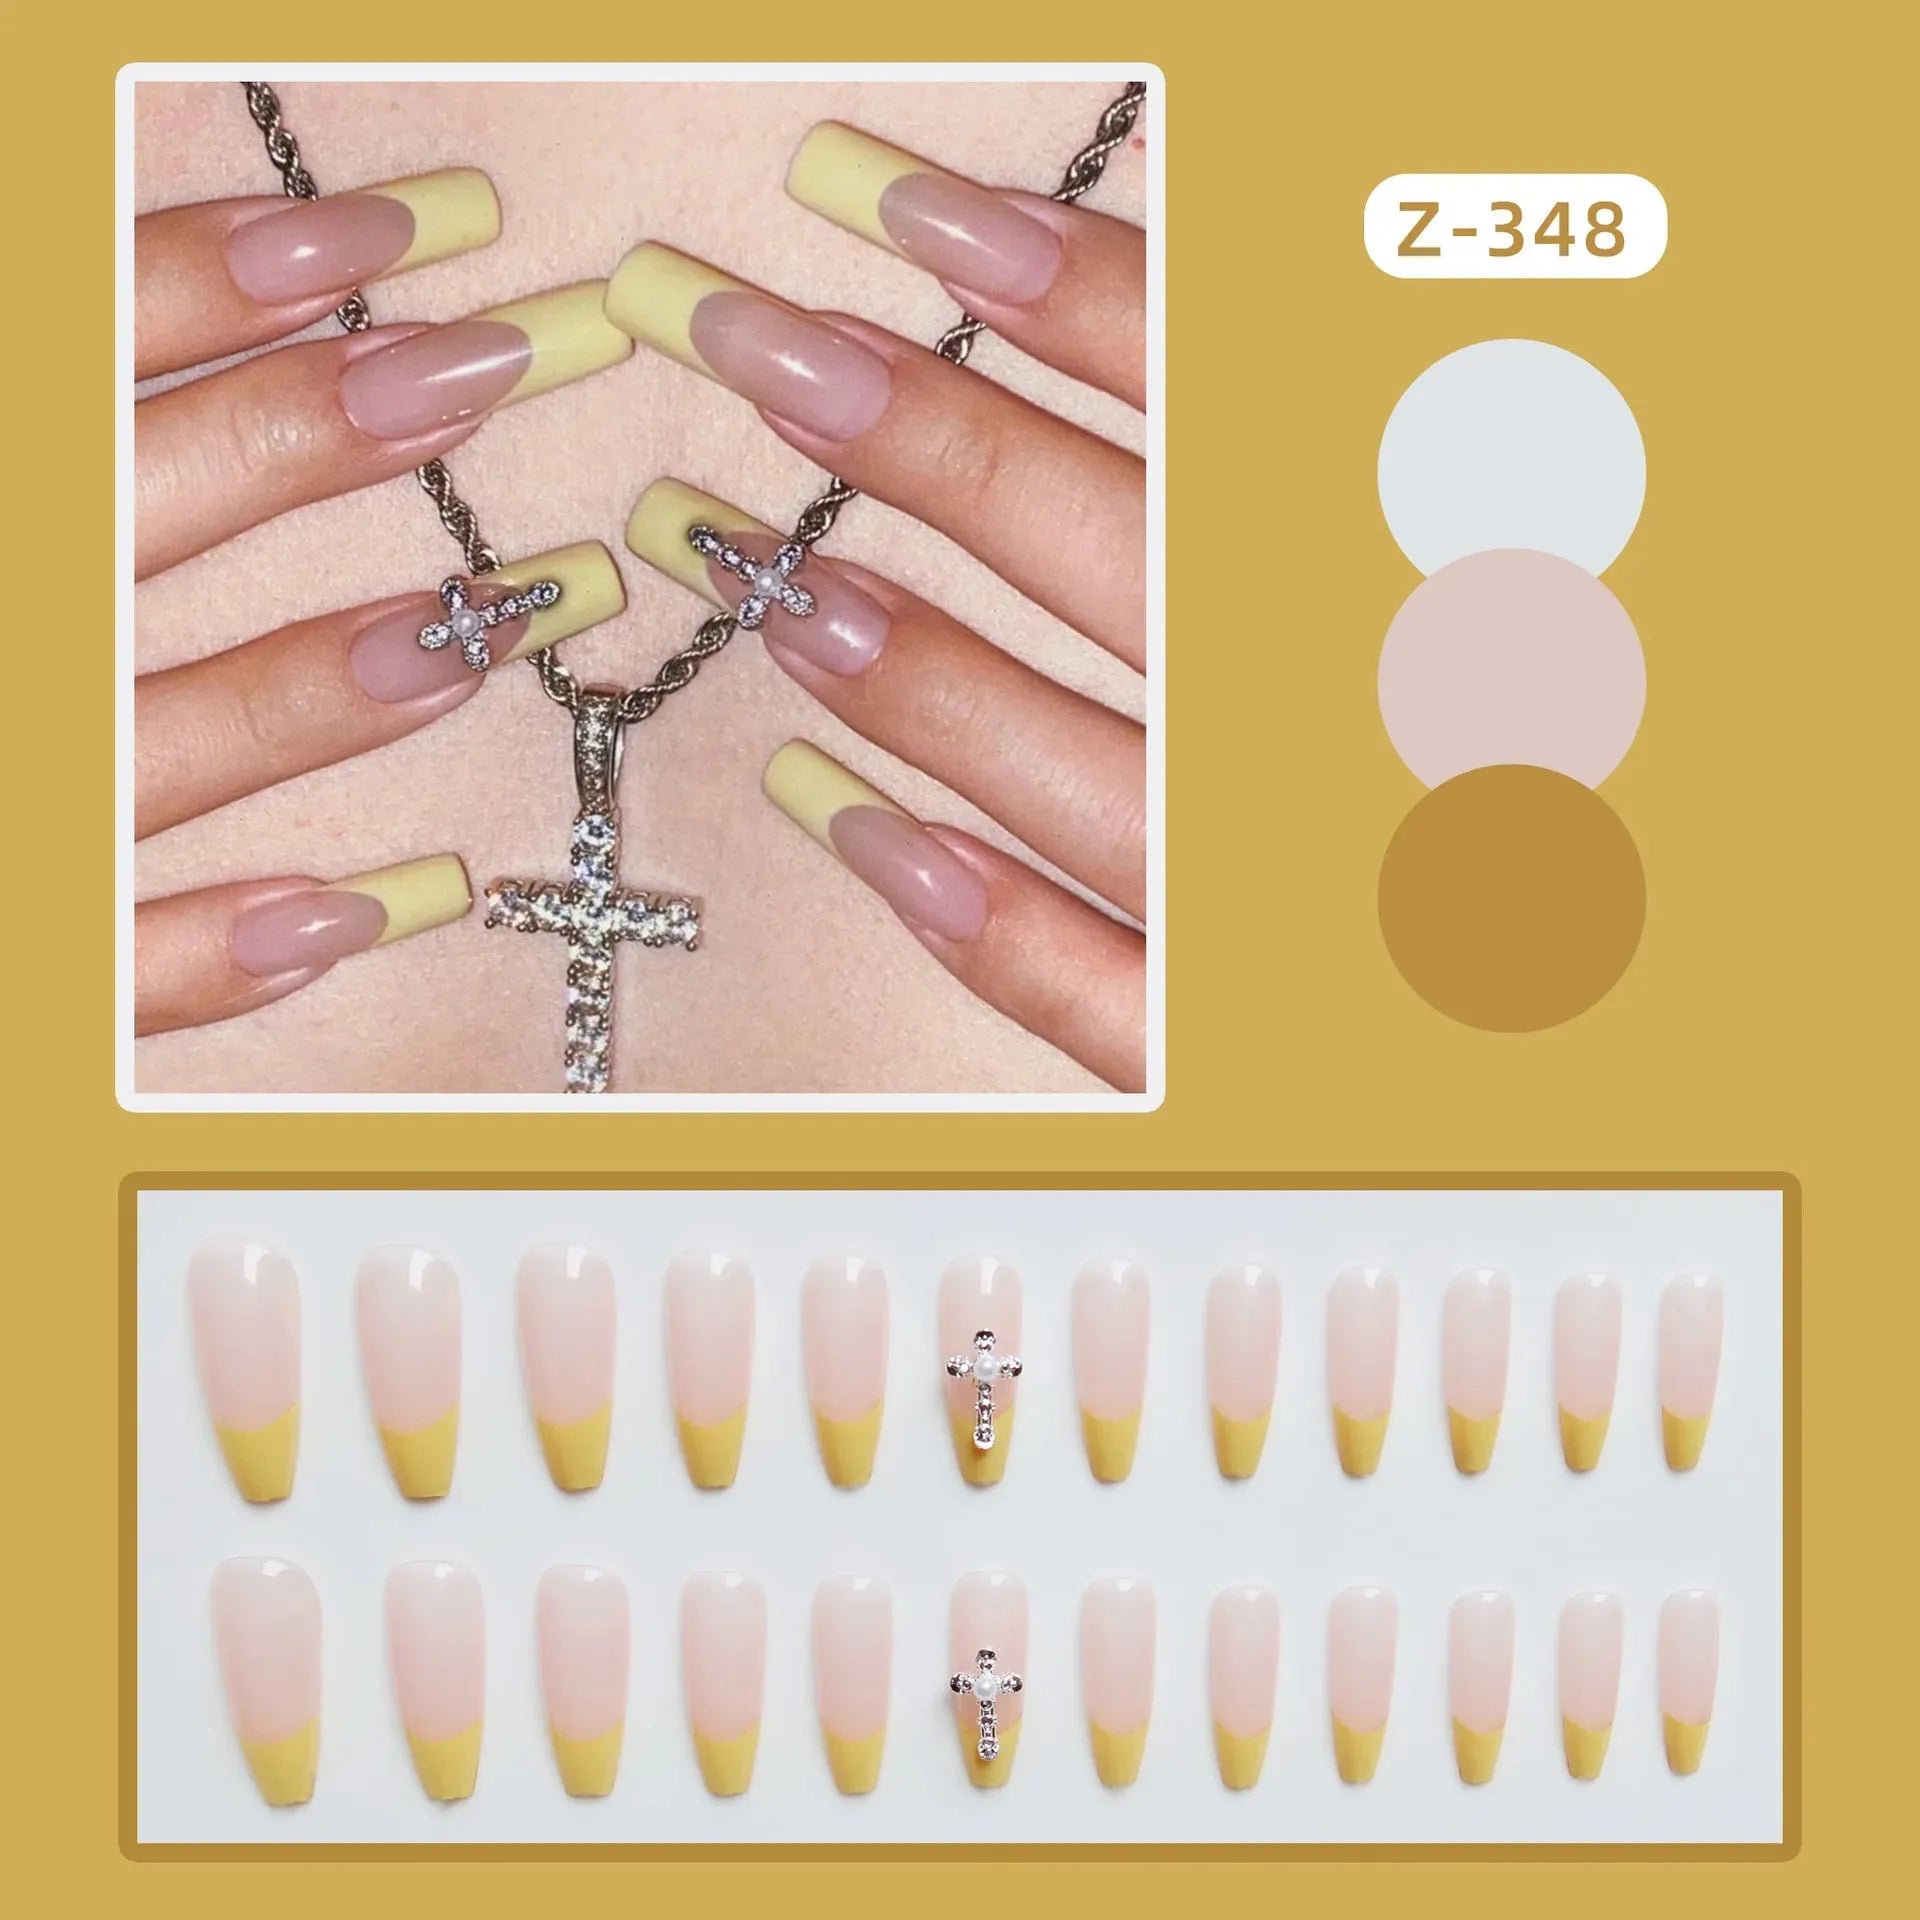 24Pcs Long Coffin Ballet False Nails Rhinestone Decorative Wedding Nail Art Tips Detachable Acrylic Full Cover Press On Nails